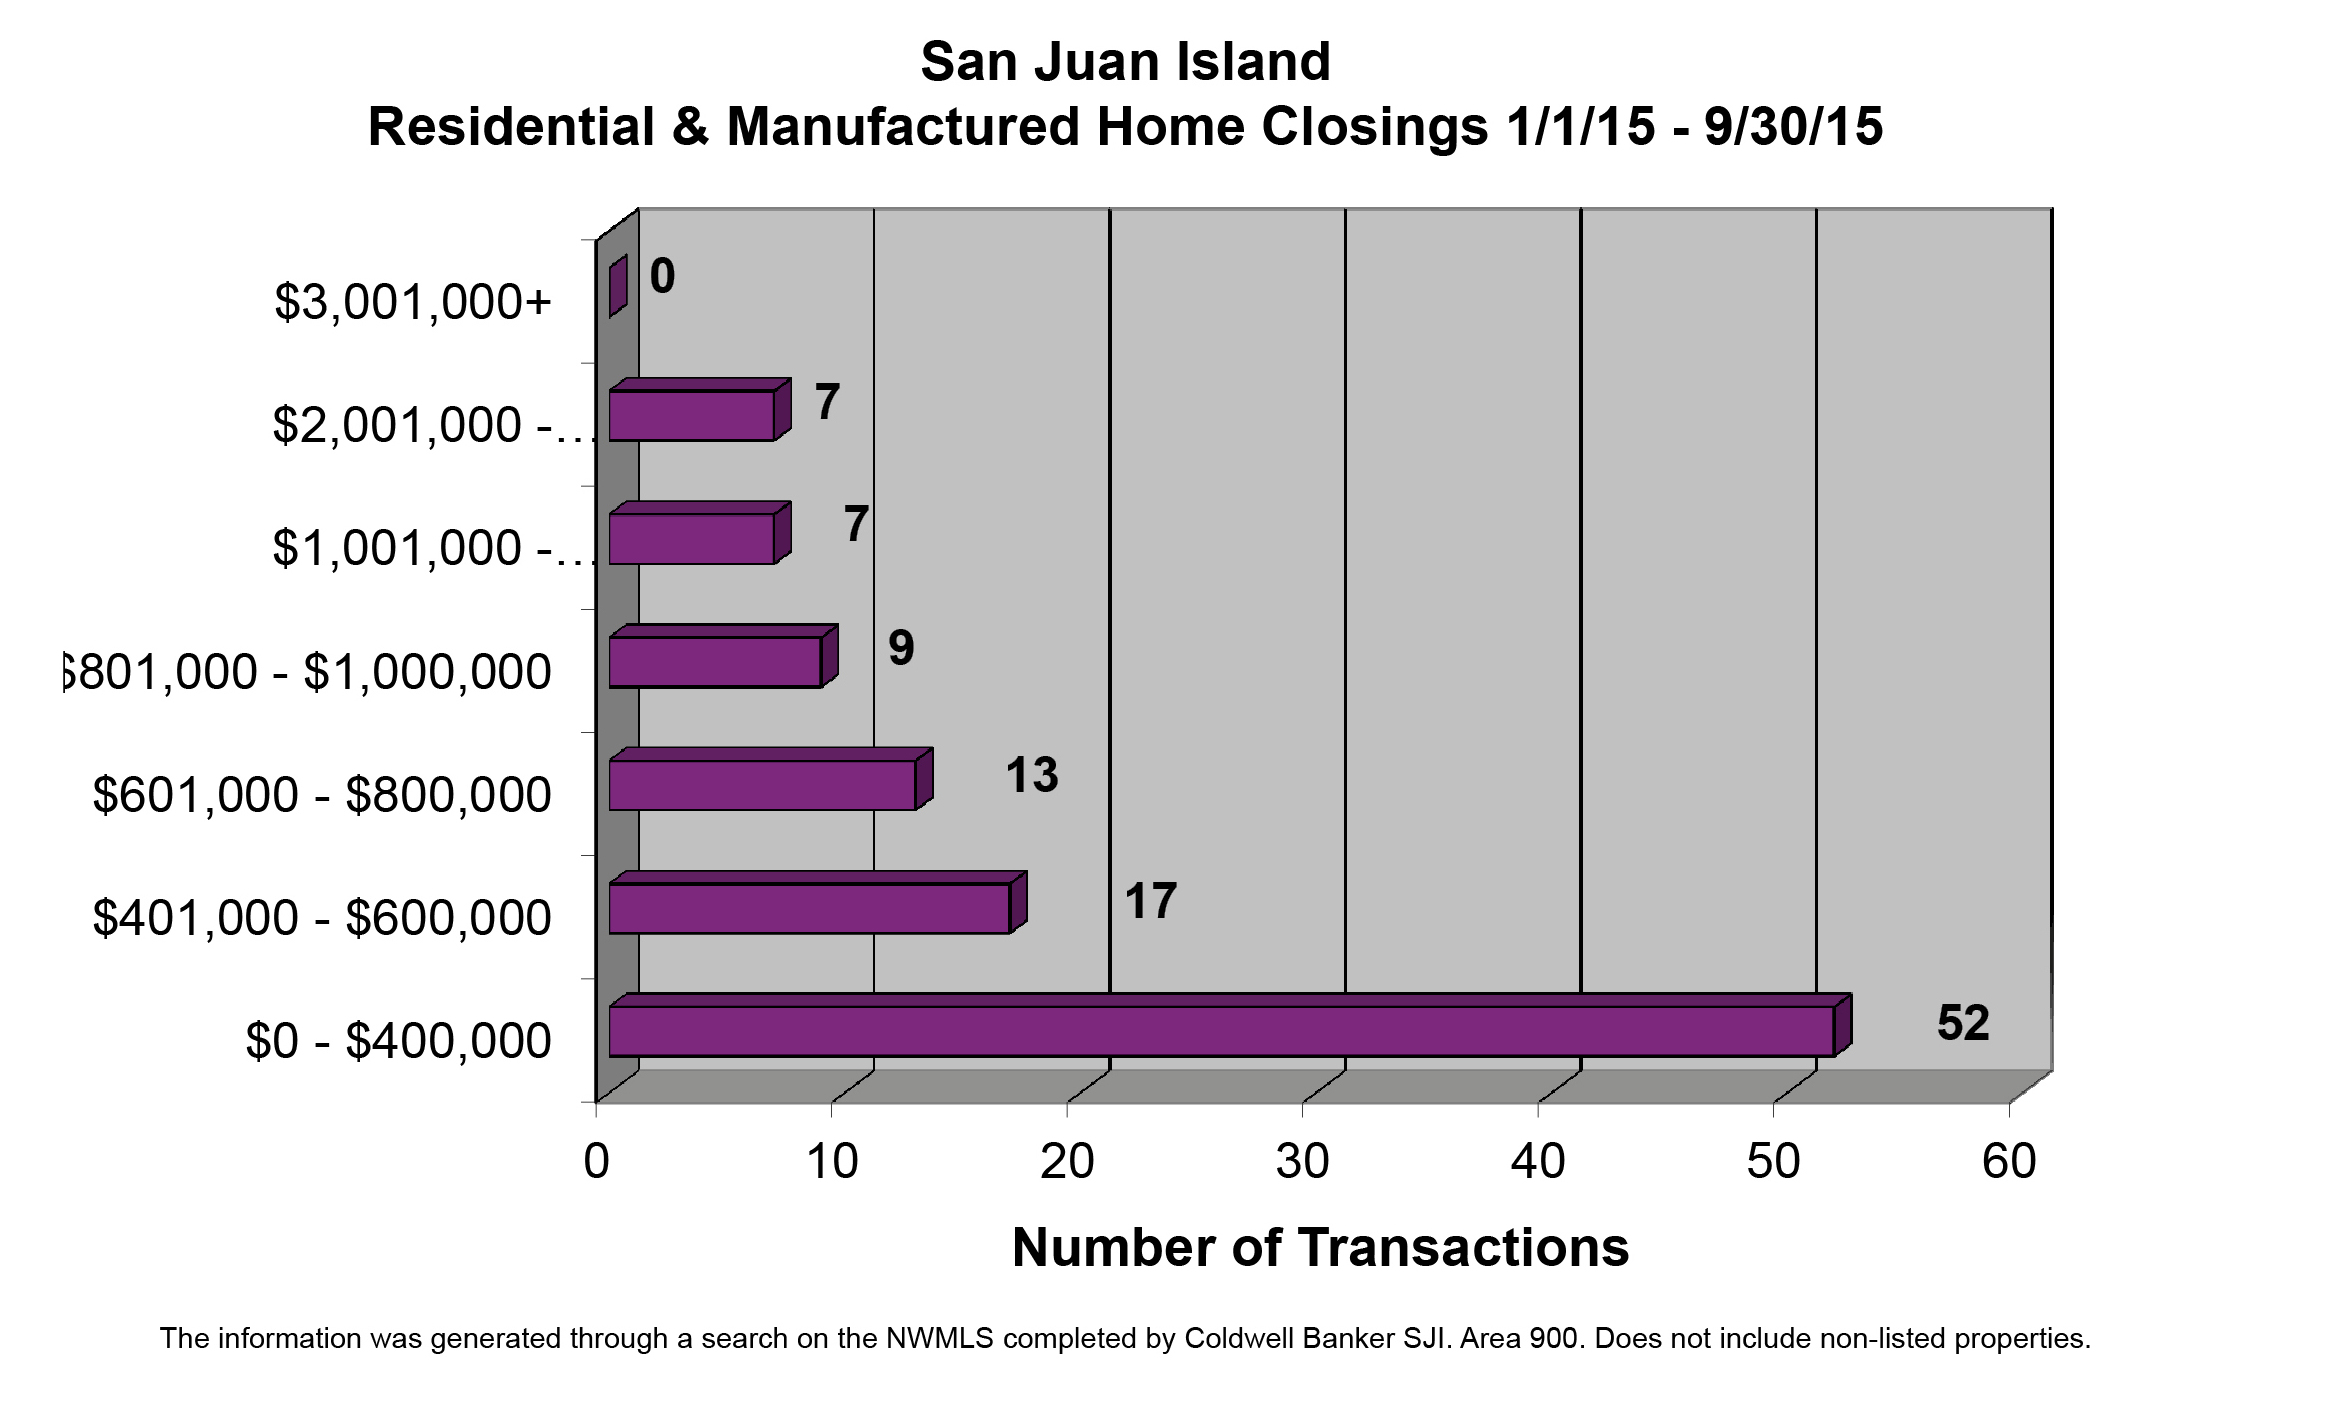 San Juan Island Home Sales Jan - Sept 2015